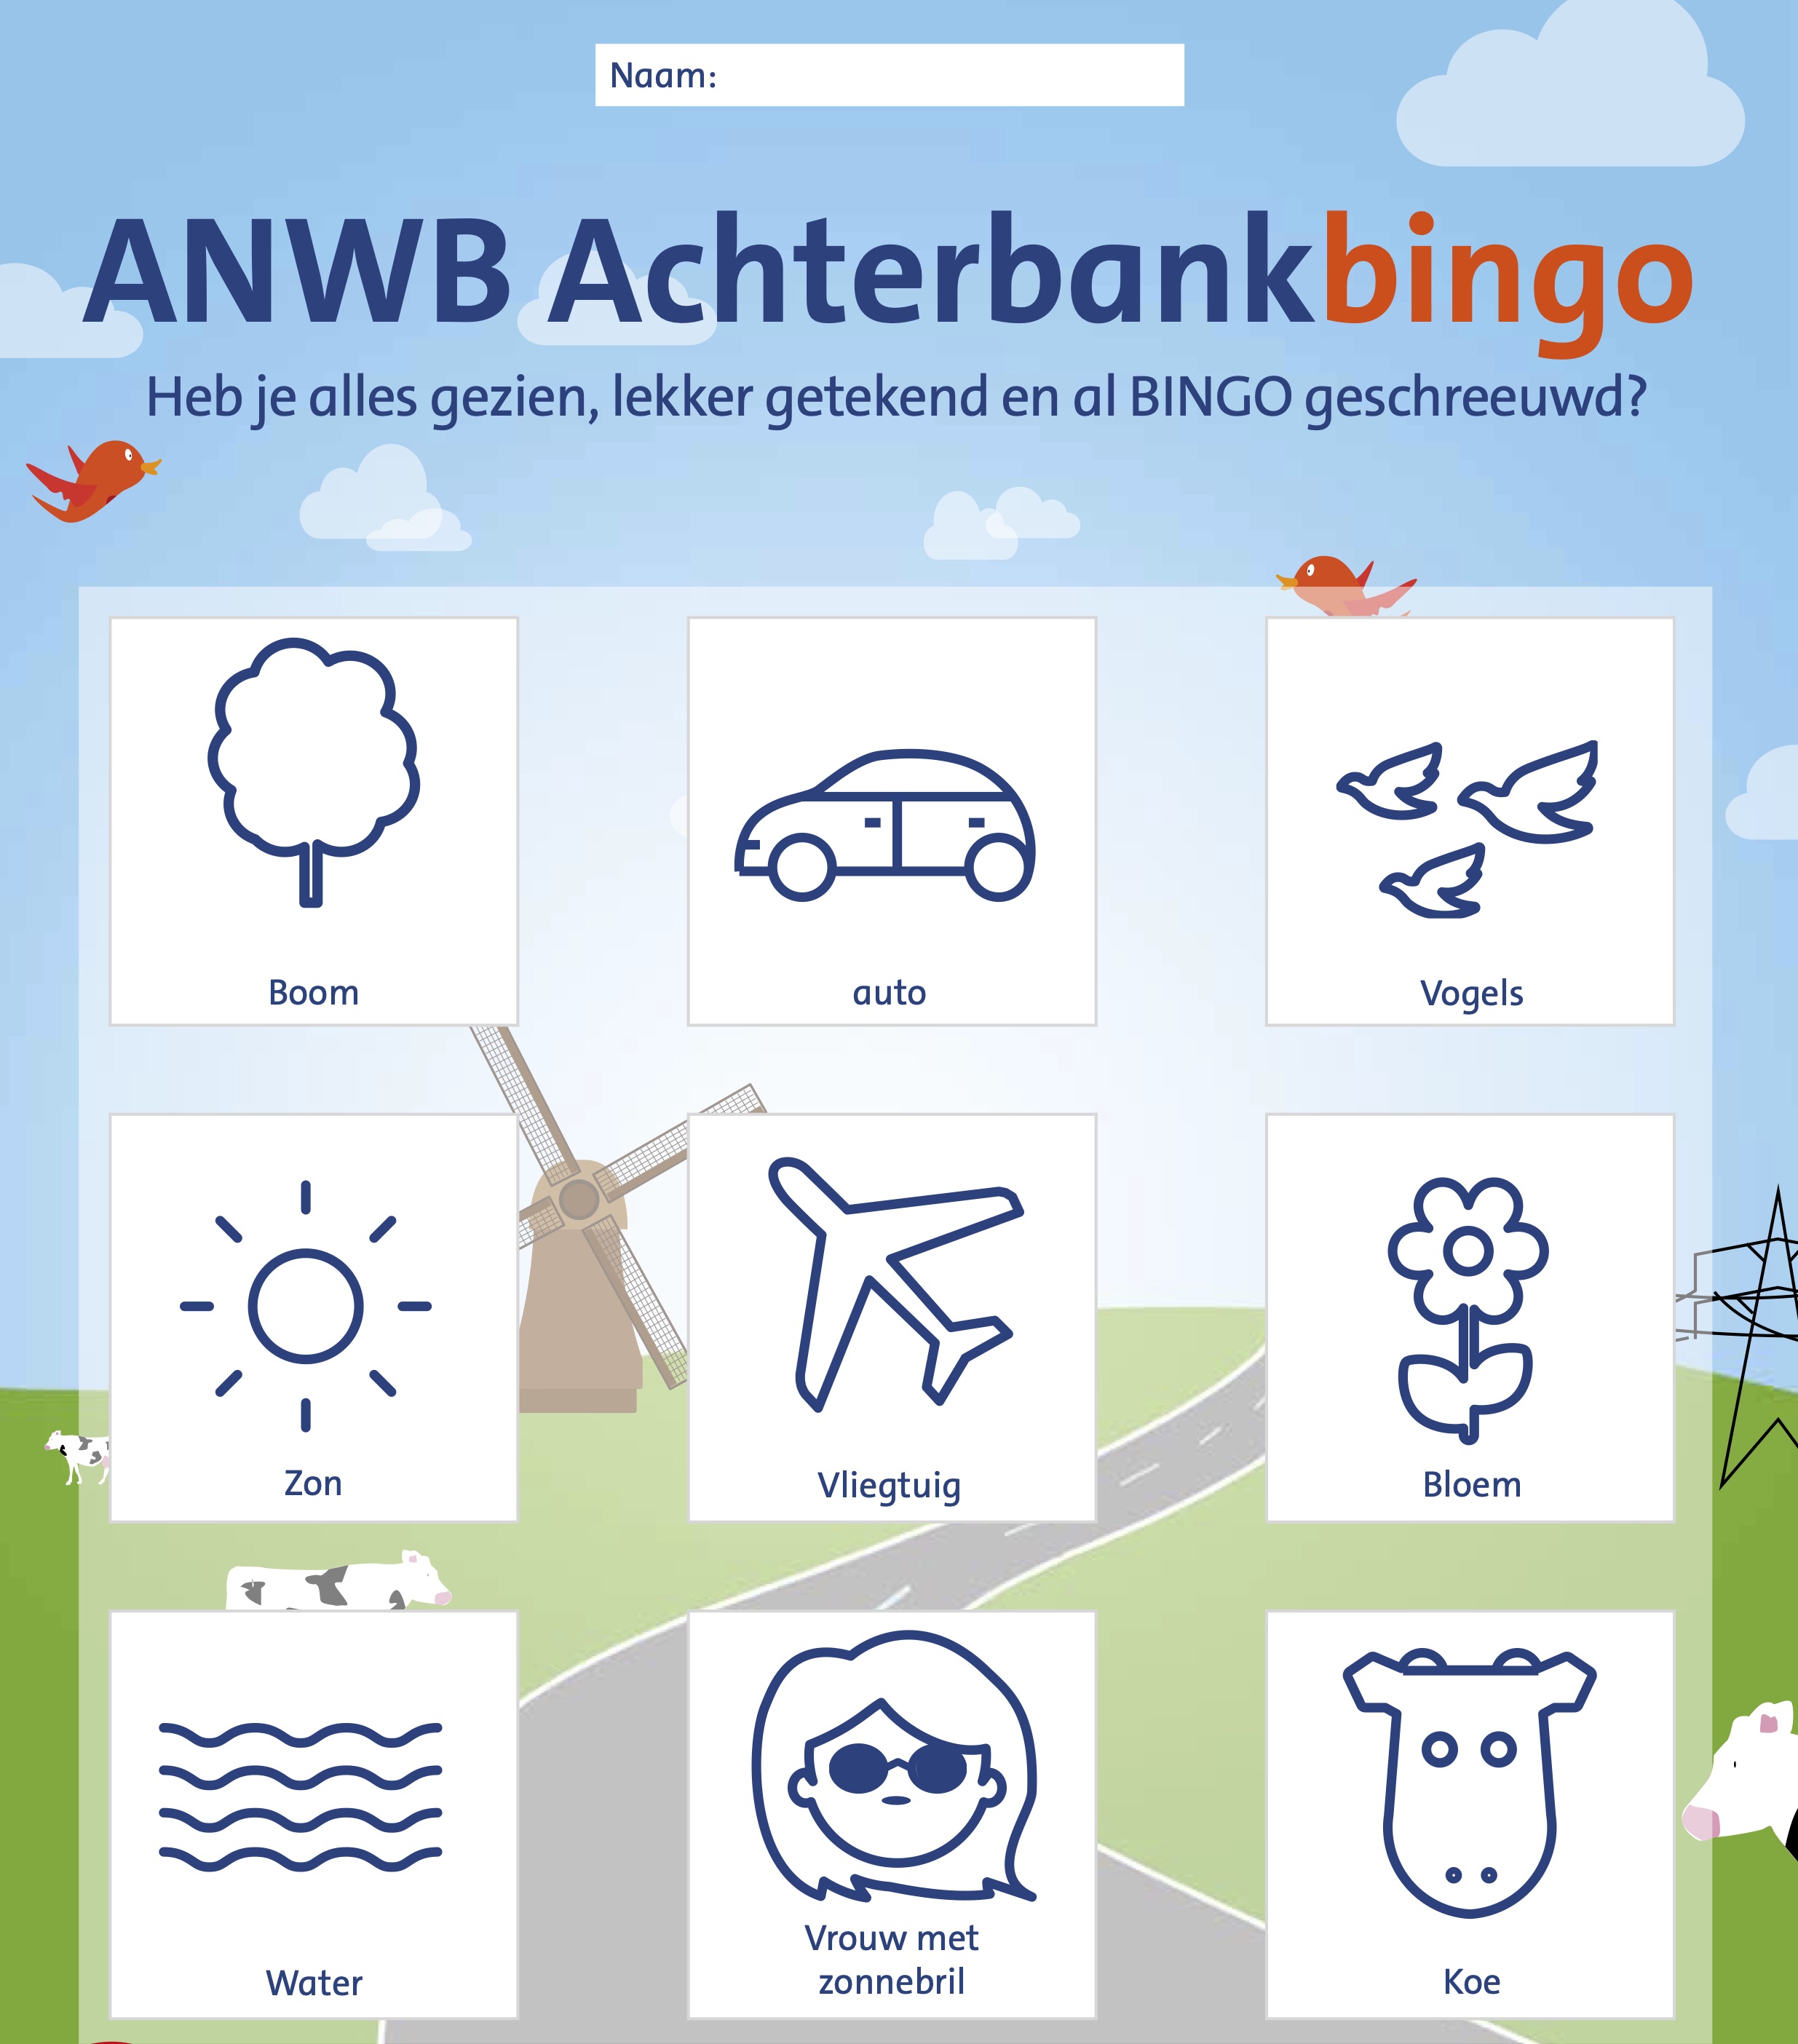 ANWB Achterbankbingo